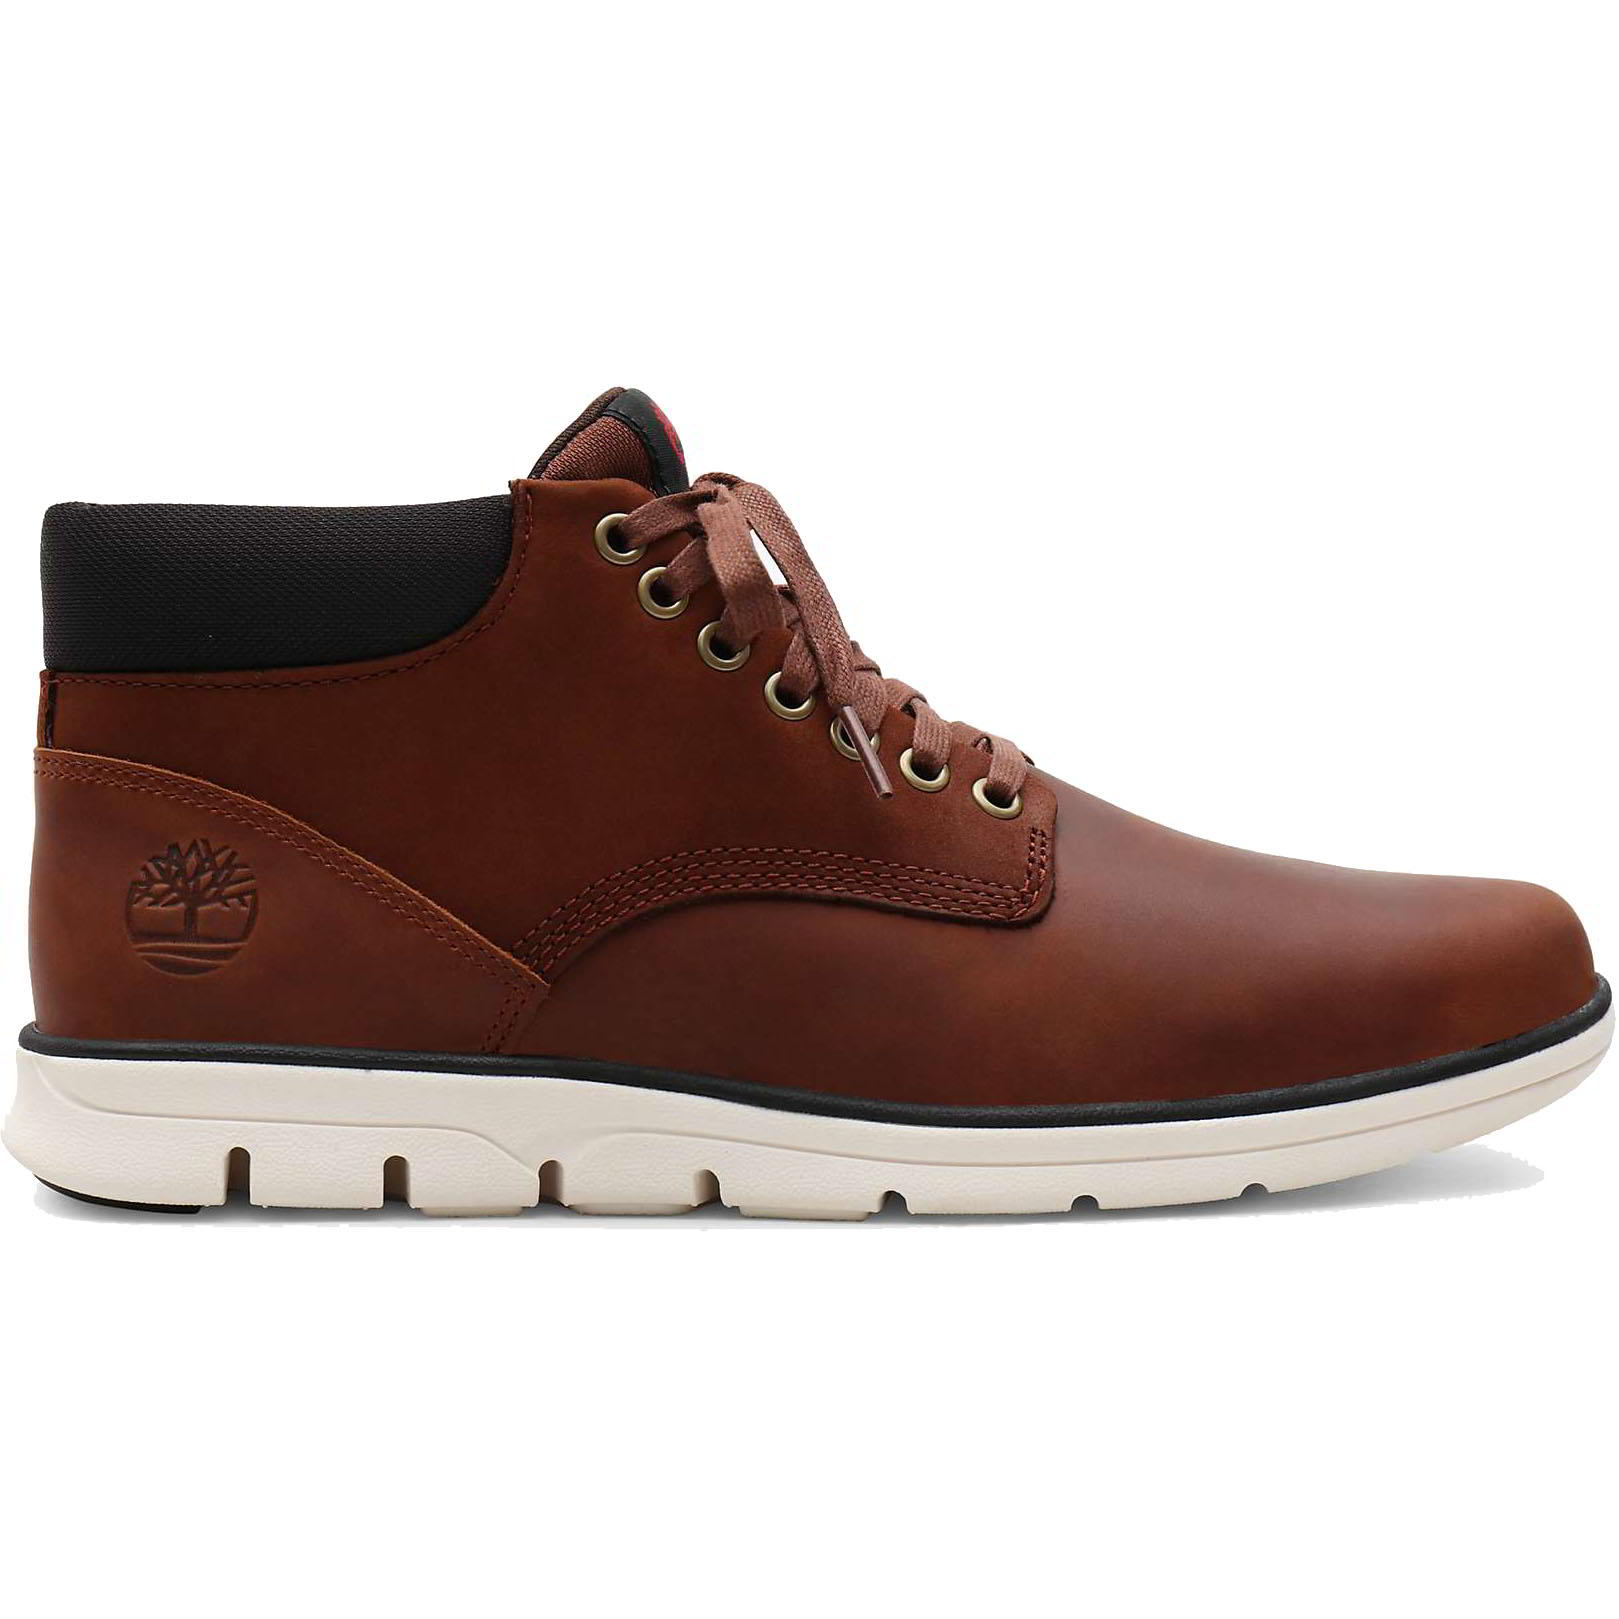 Timberland Men's Bradstreet Chukka Leather Ankle Boots - UK 10.5